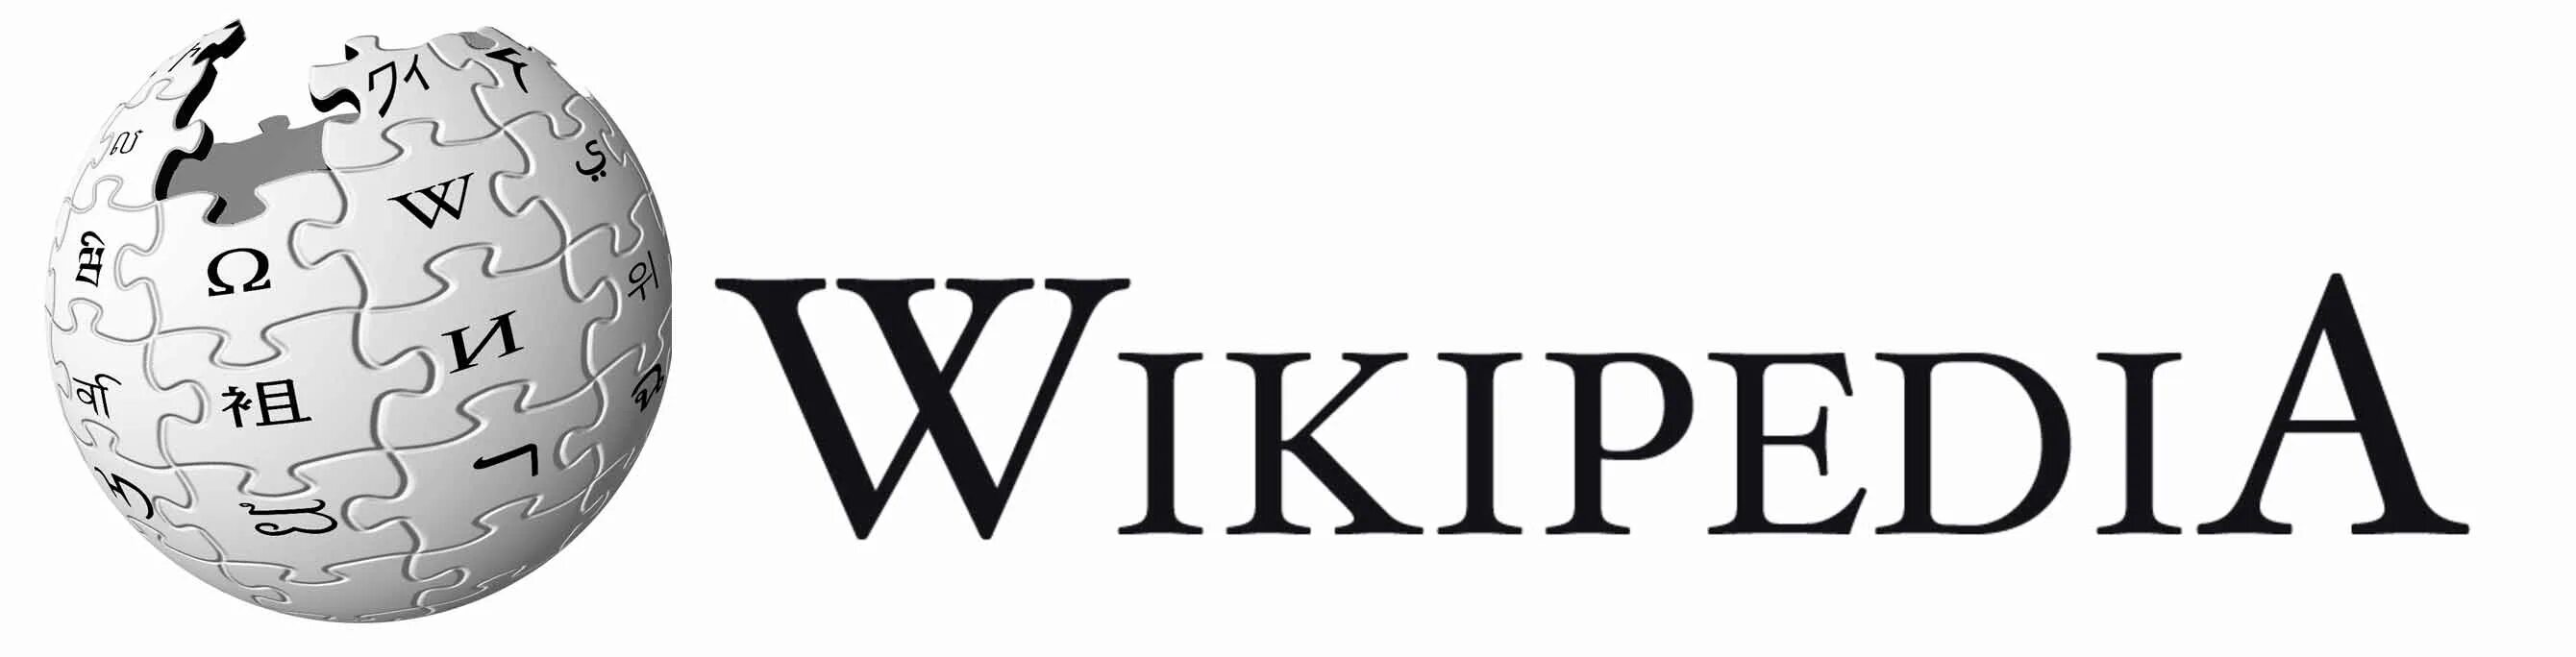 1 ru wikipedia org wiki. Википедия эмблема. Значок Википедии. Википедия логотип картинка. Википедия картинки.